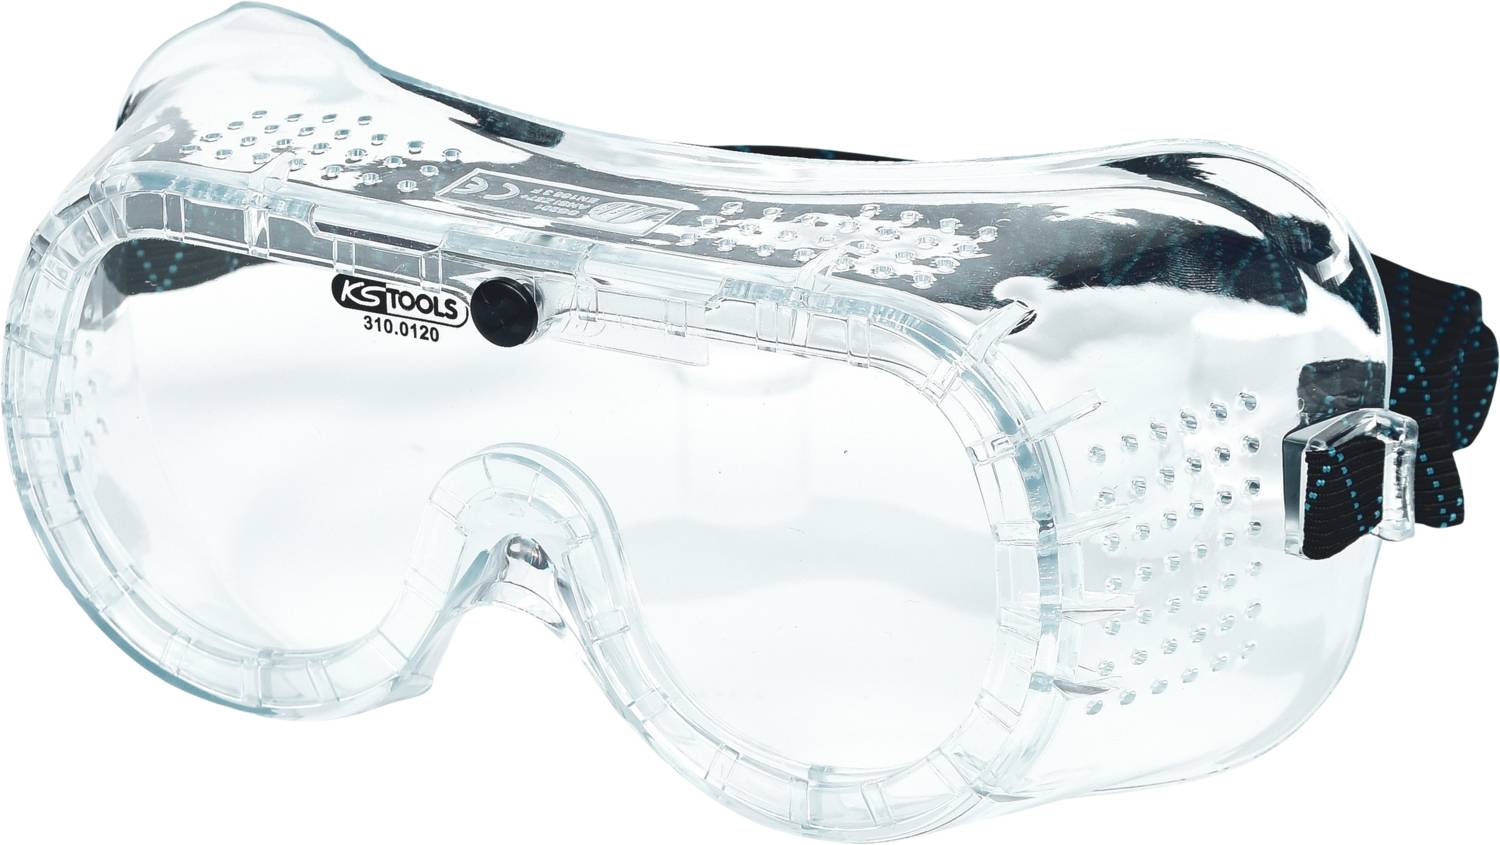 KS TOOLS Schutzbrille mit Gummiband-transparent, EN 166 (310.0120)